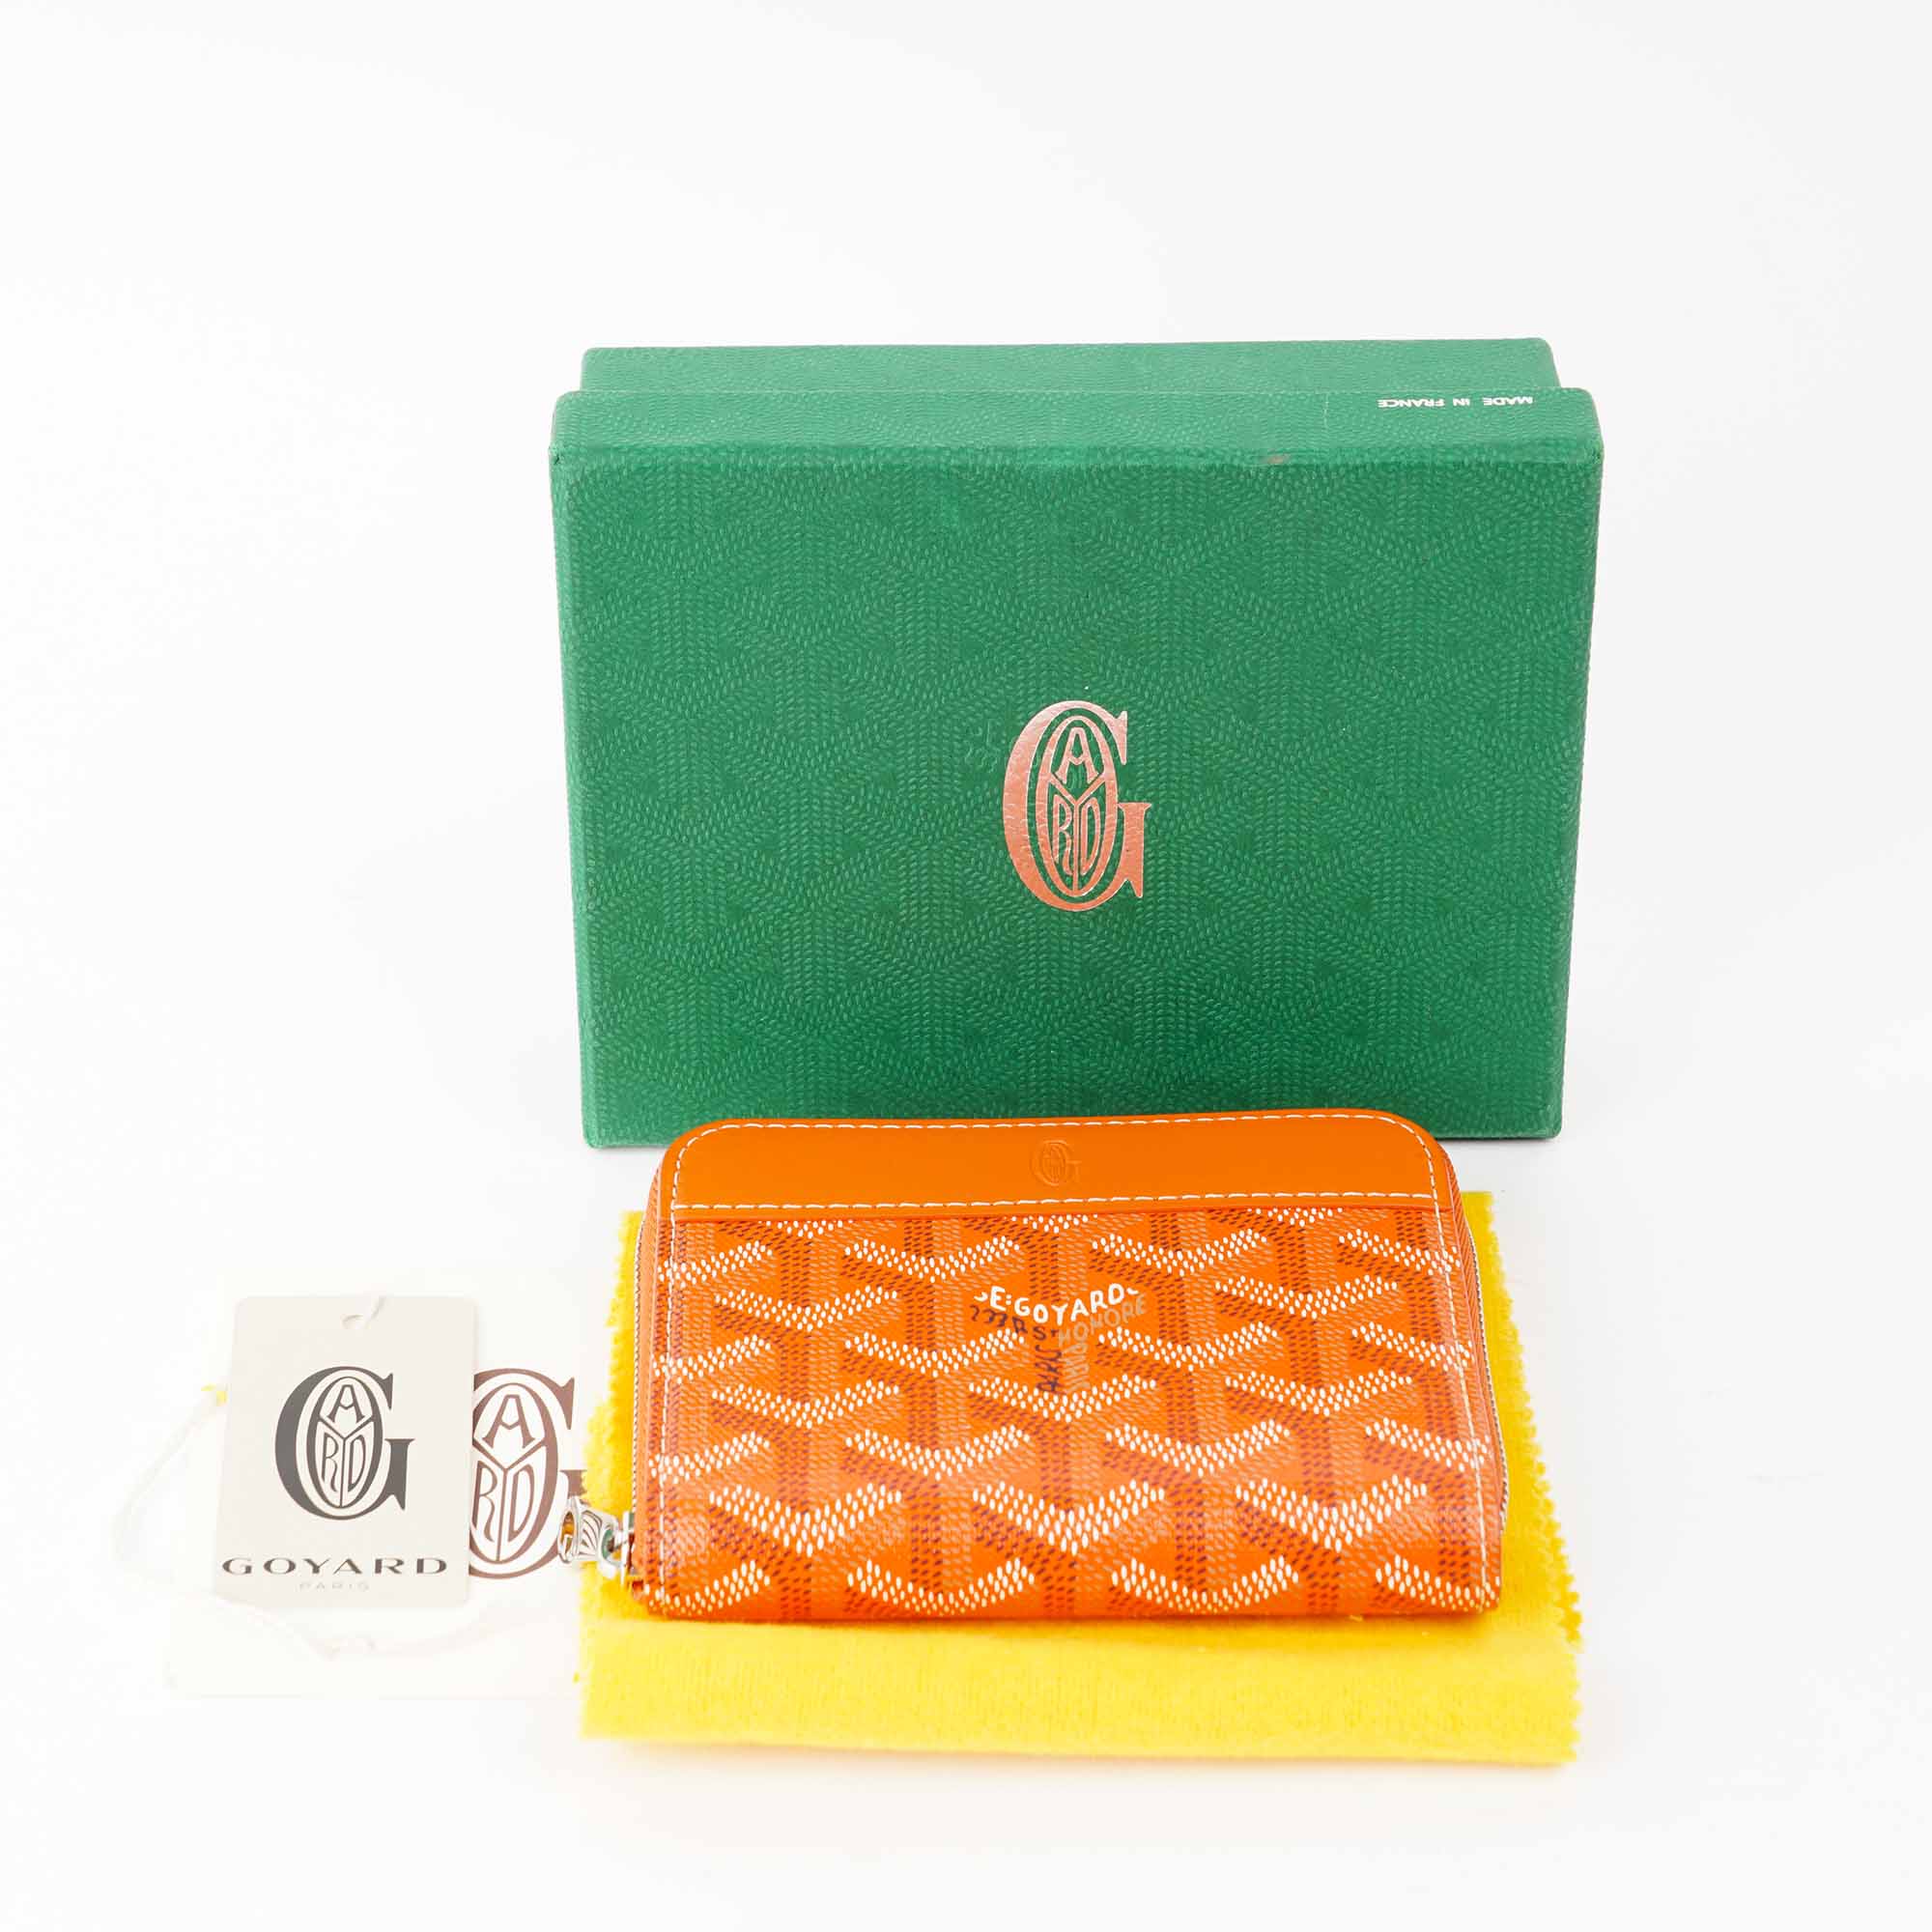 Matignon PM Wallet - GOYARD - Affordable Luxury image